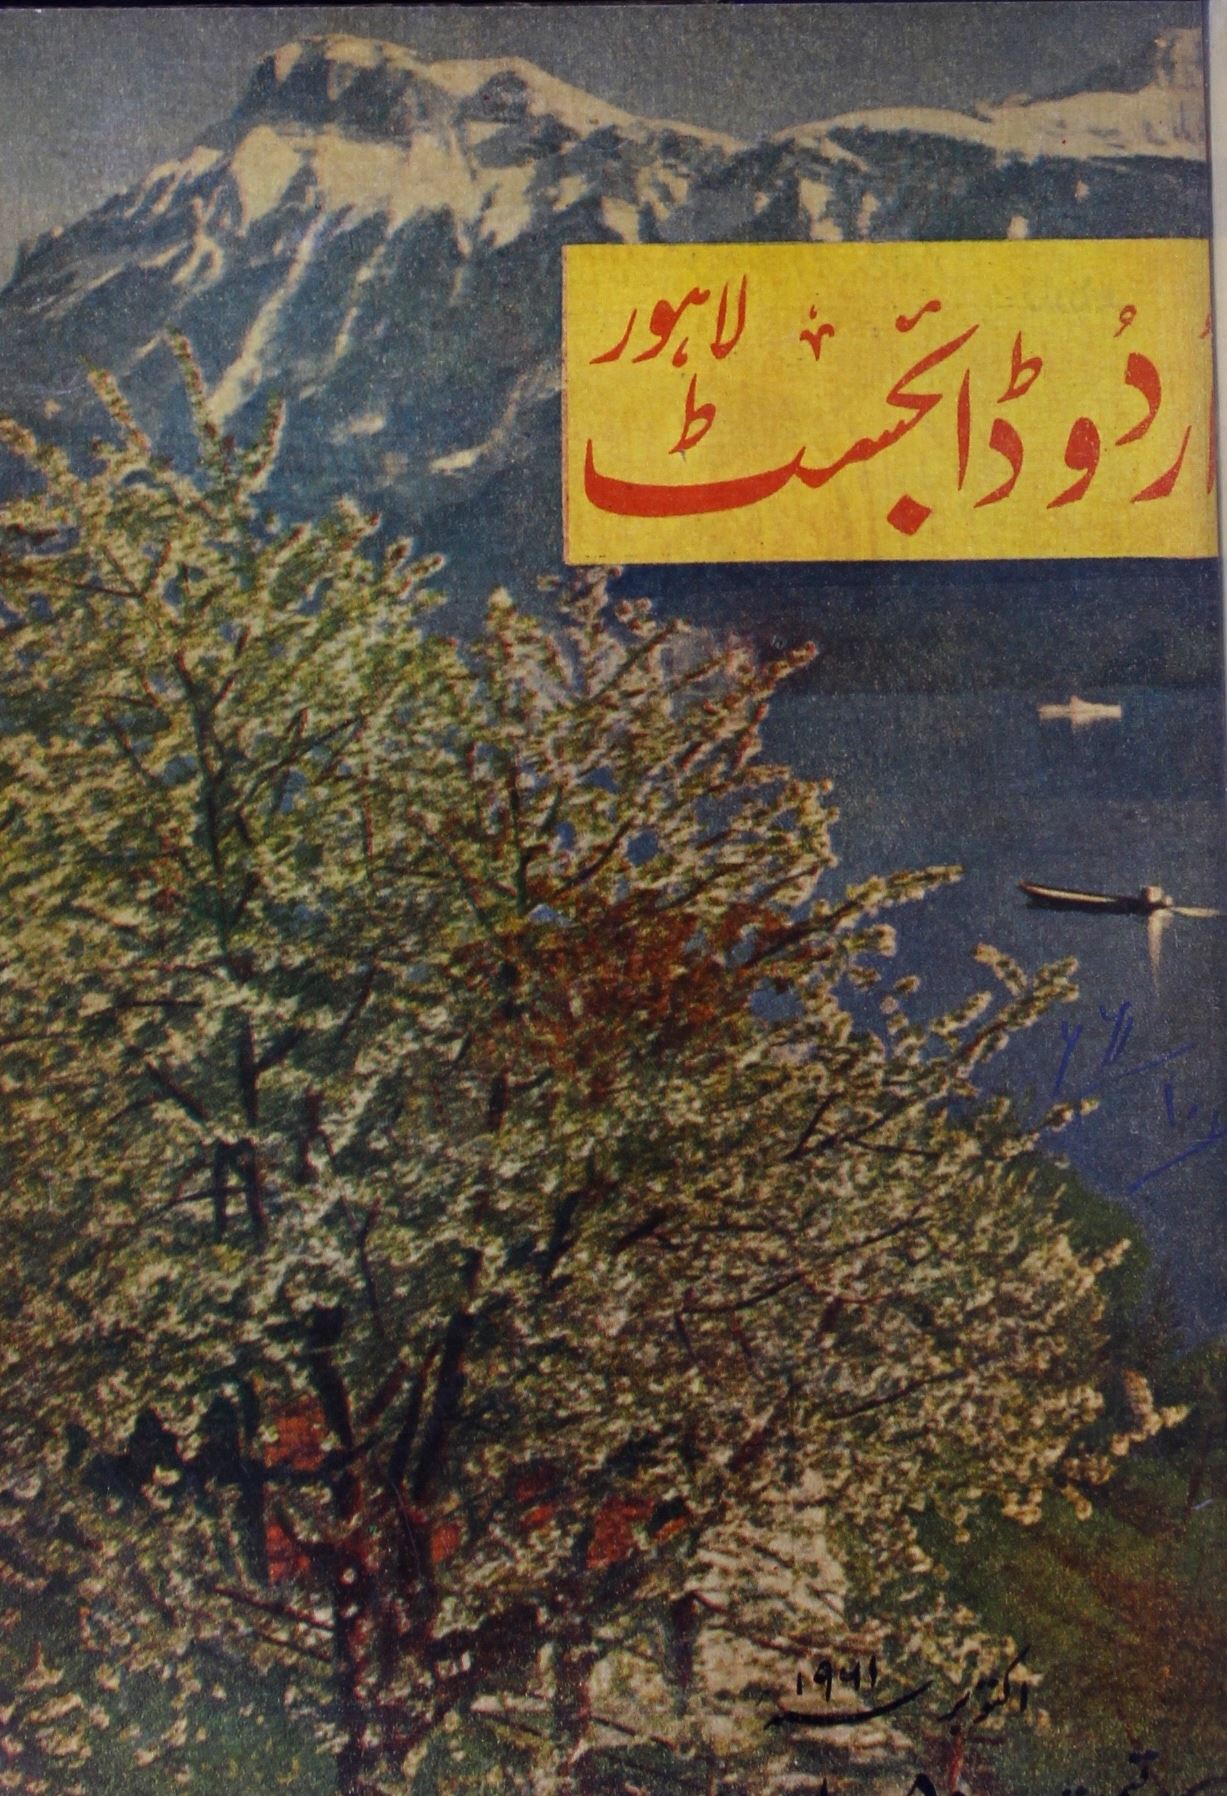 Urdu Digest Jild 1 Sh. 12 Oct. 1961